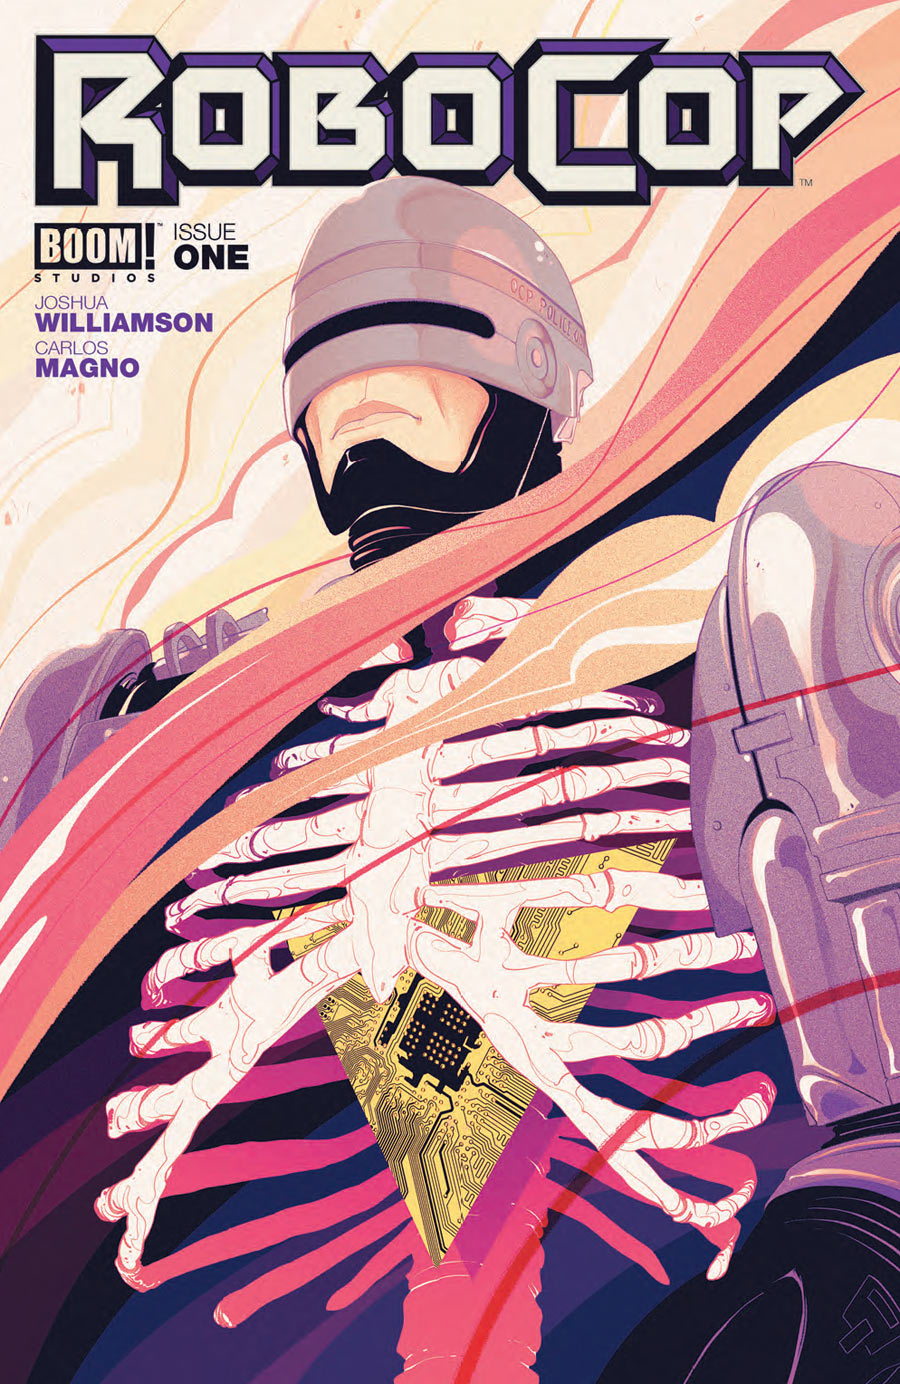 Robocop (2014) #1 cover